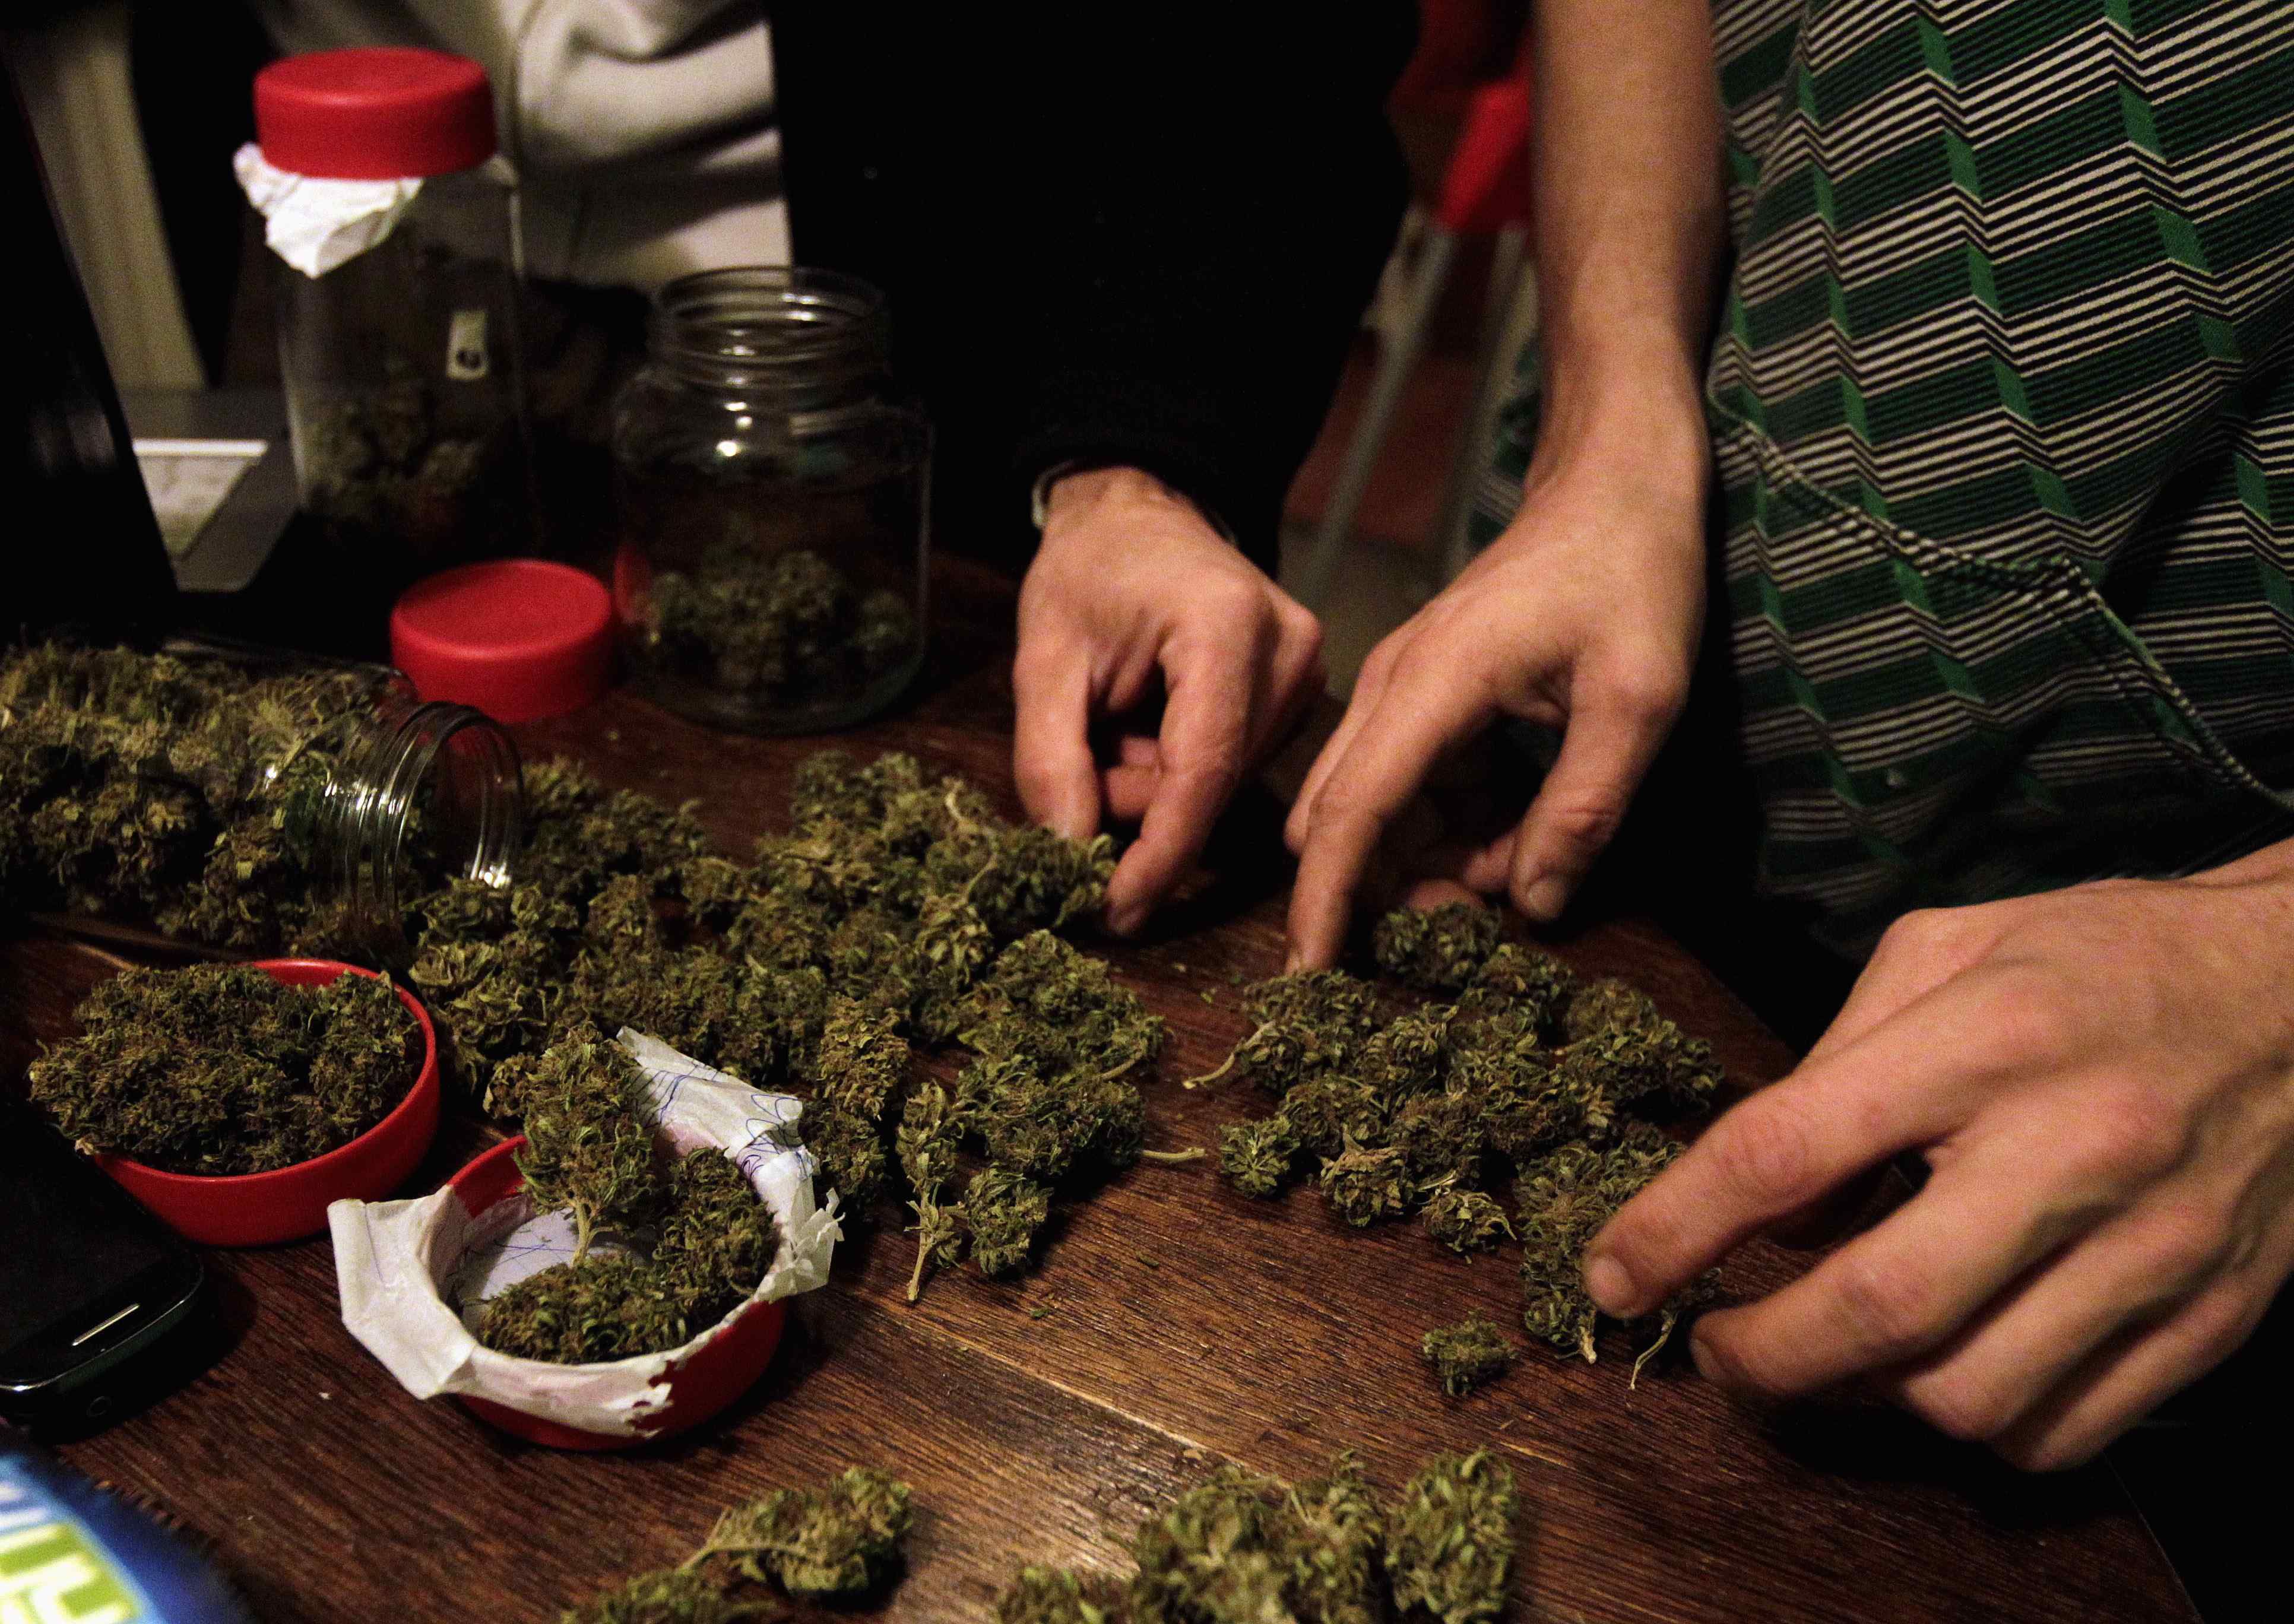 File photo of marijuana grower and activist showing marijuana in Montevideo